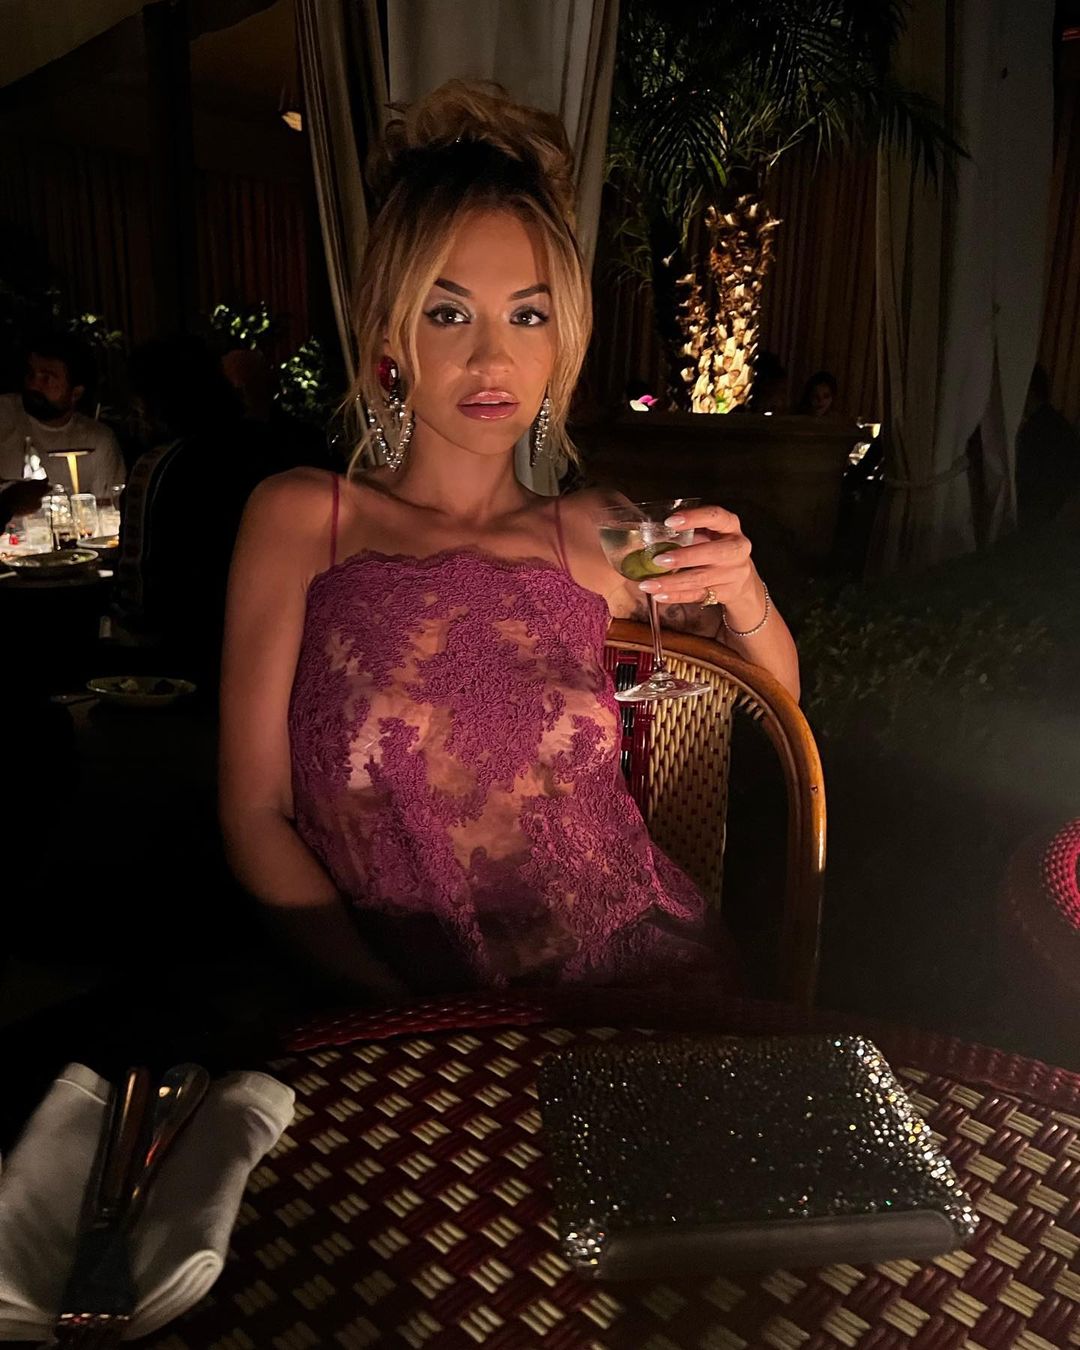 Rita Ora seen in Purple Transparent Dress with Black Undies, Jan 2023